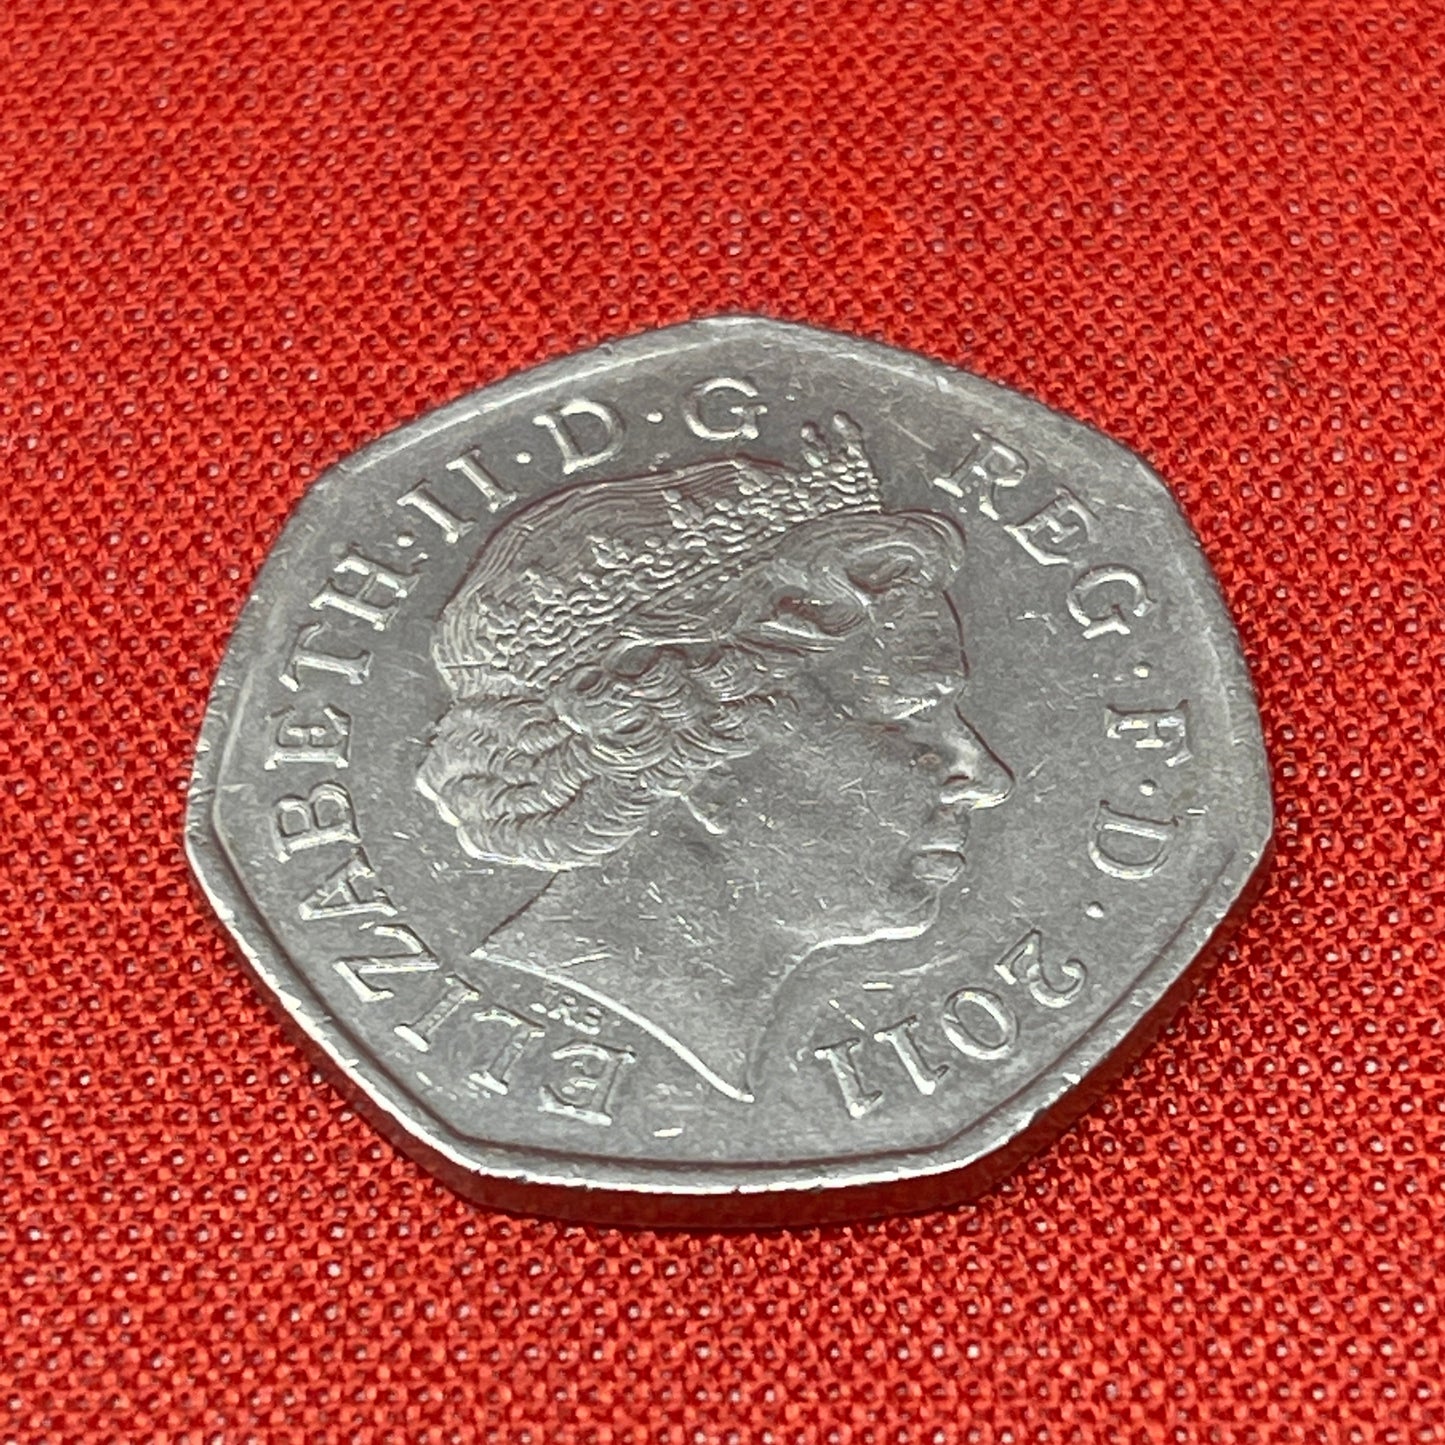 2011 Olympics Gymnastics 50p Circulated Coin